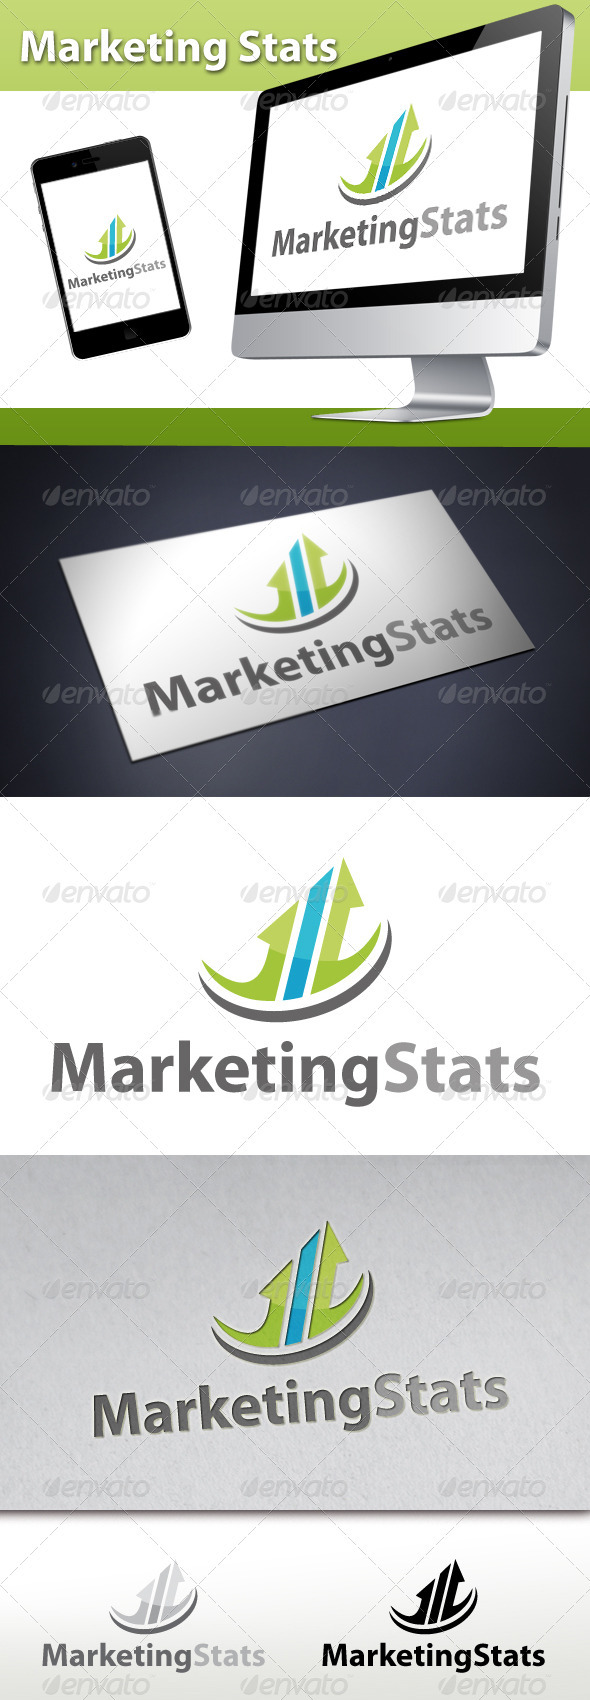 Marketing Stats Logo 1